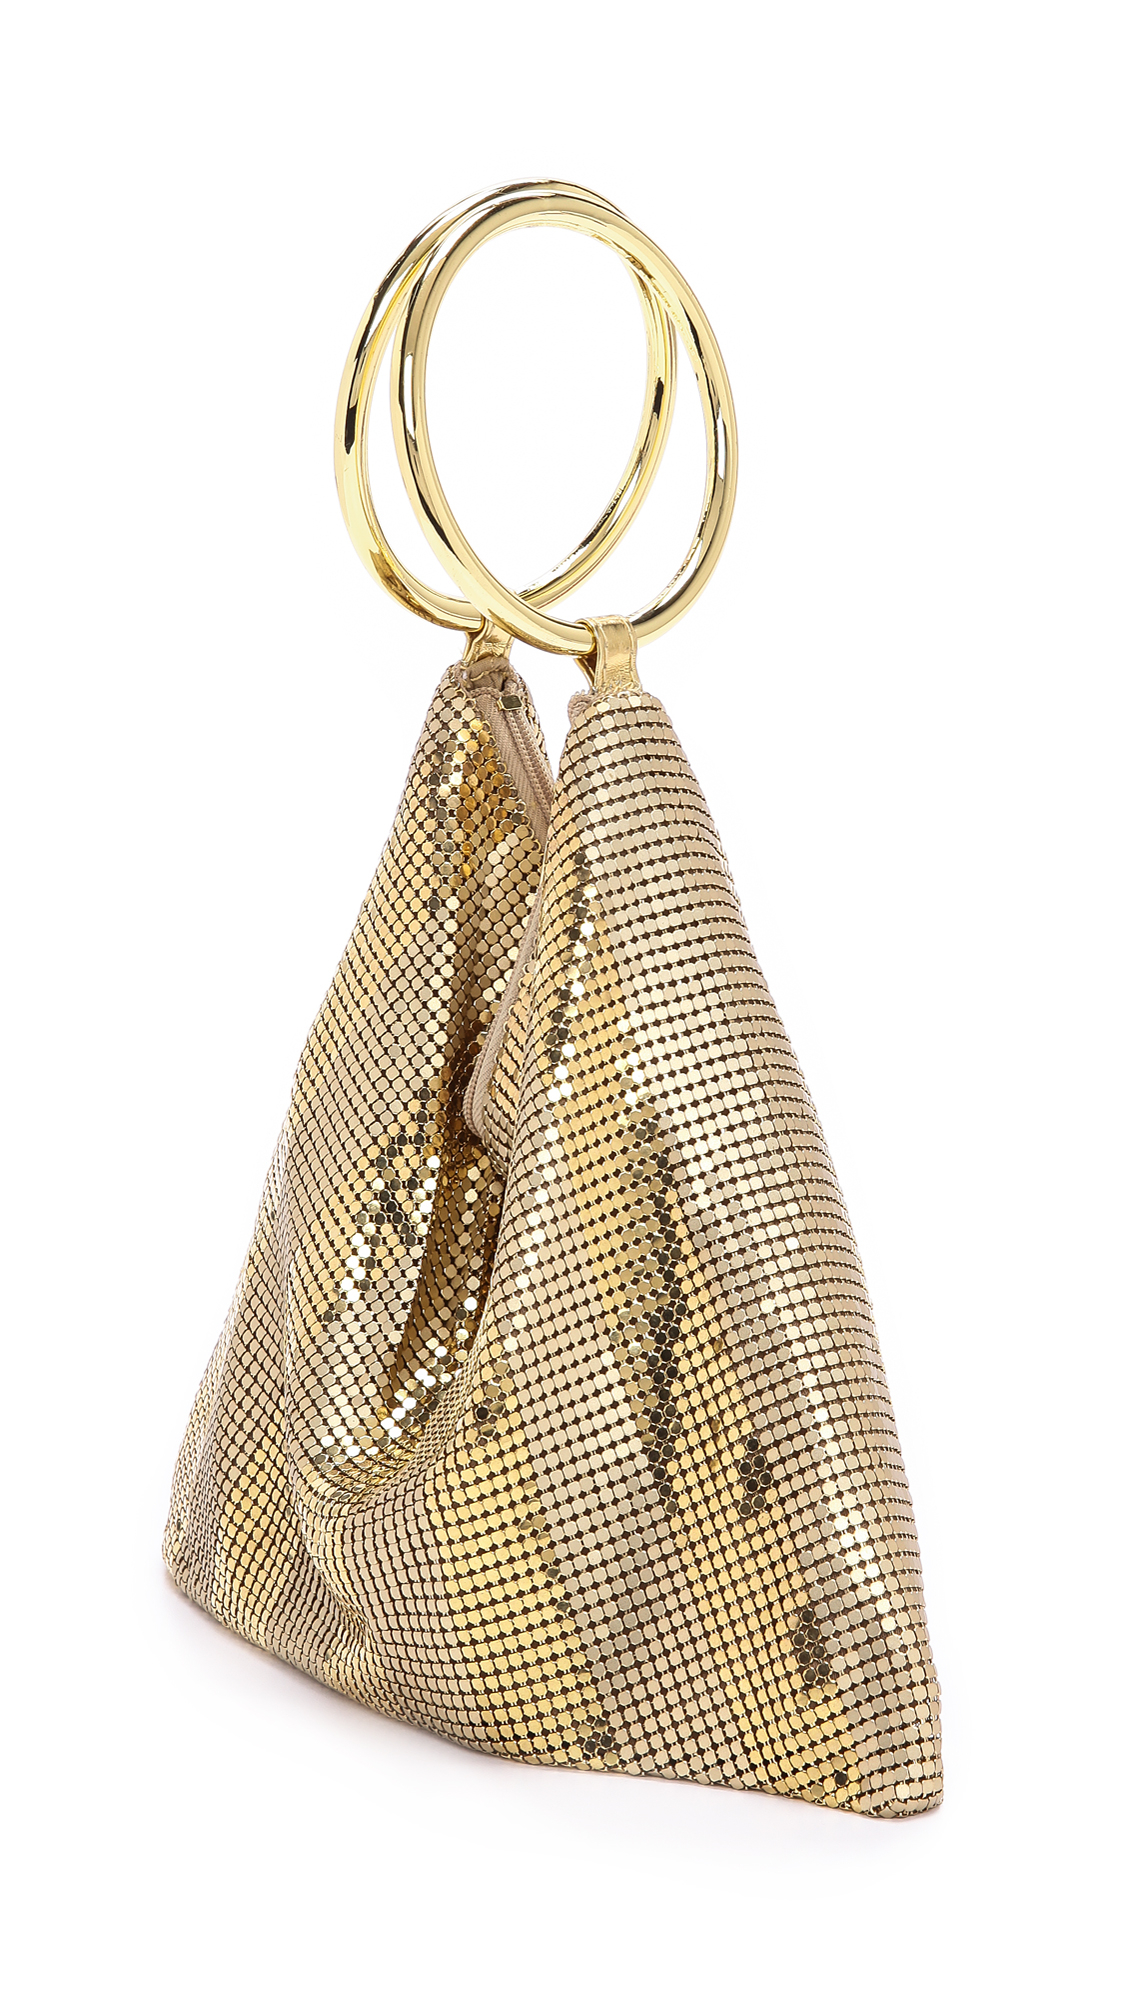 Whiting & Davis Matte Stripe Double Ring Bag in Gold (Metallic) - Lyst